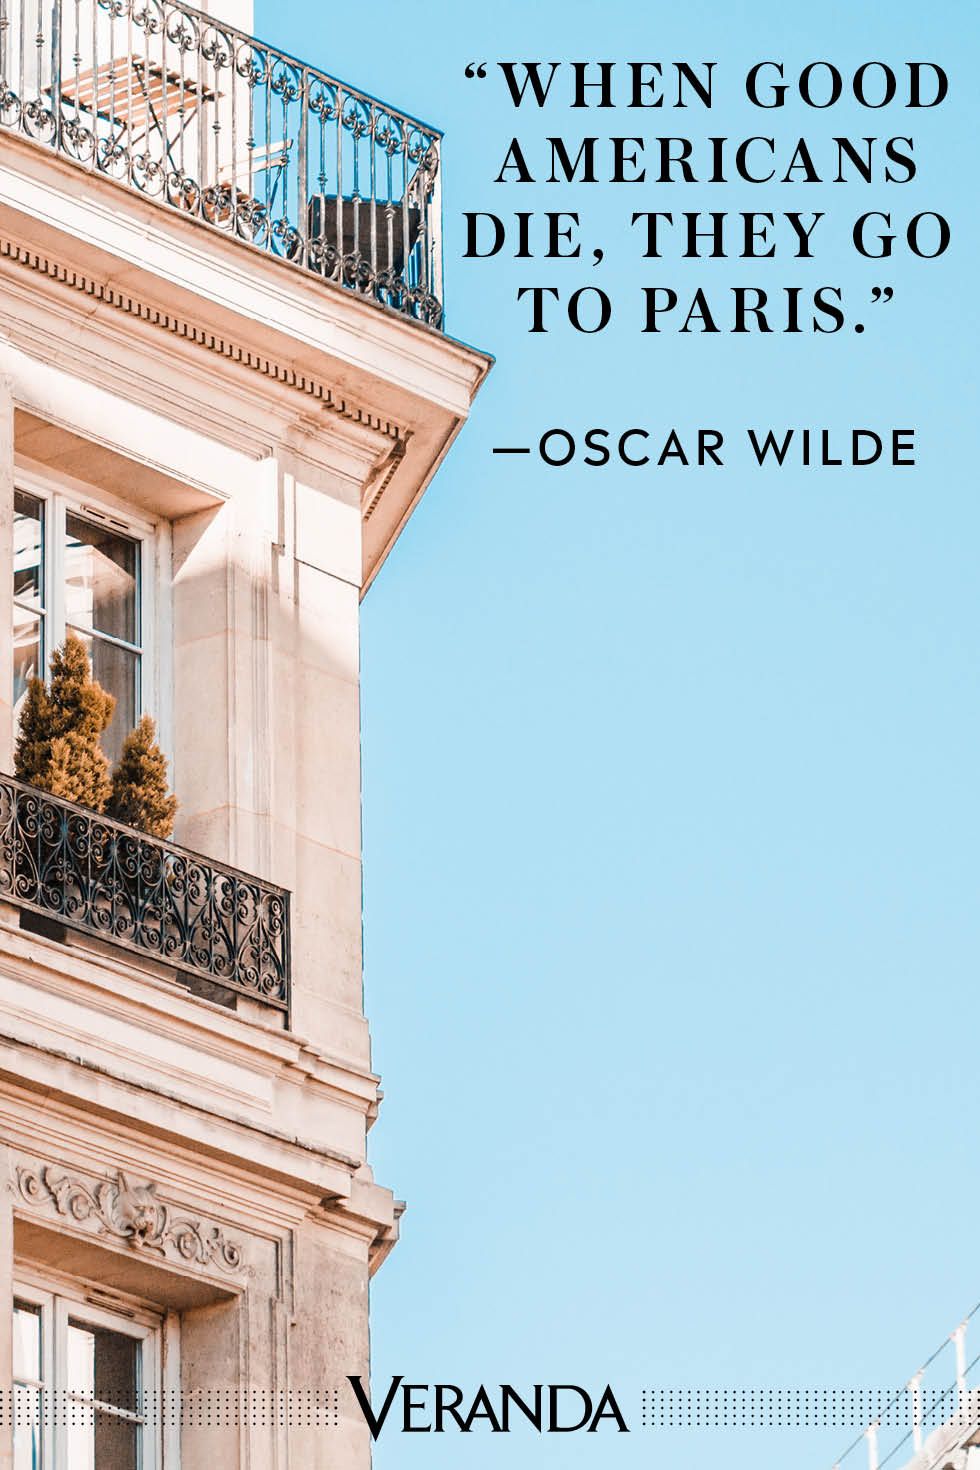 Veranda quotes about Paris Oscar Wilde